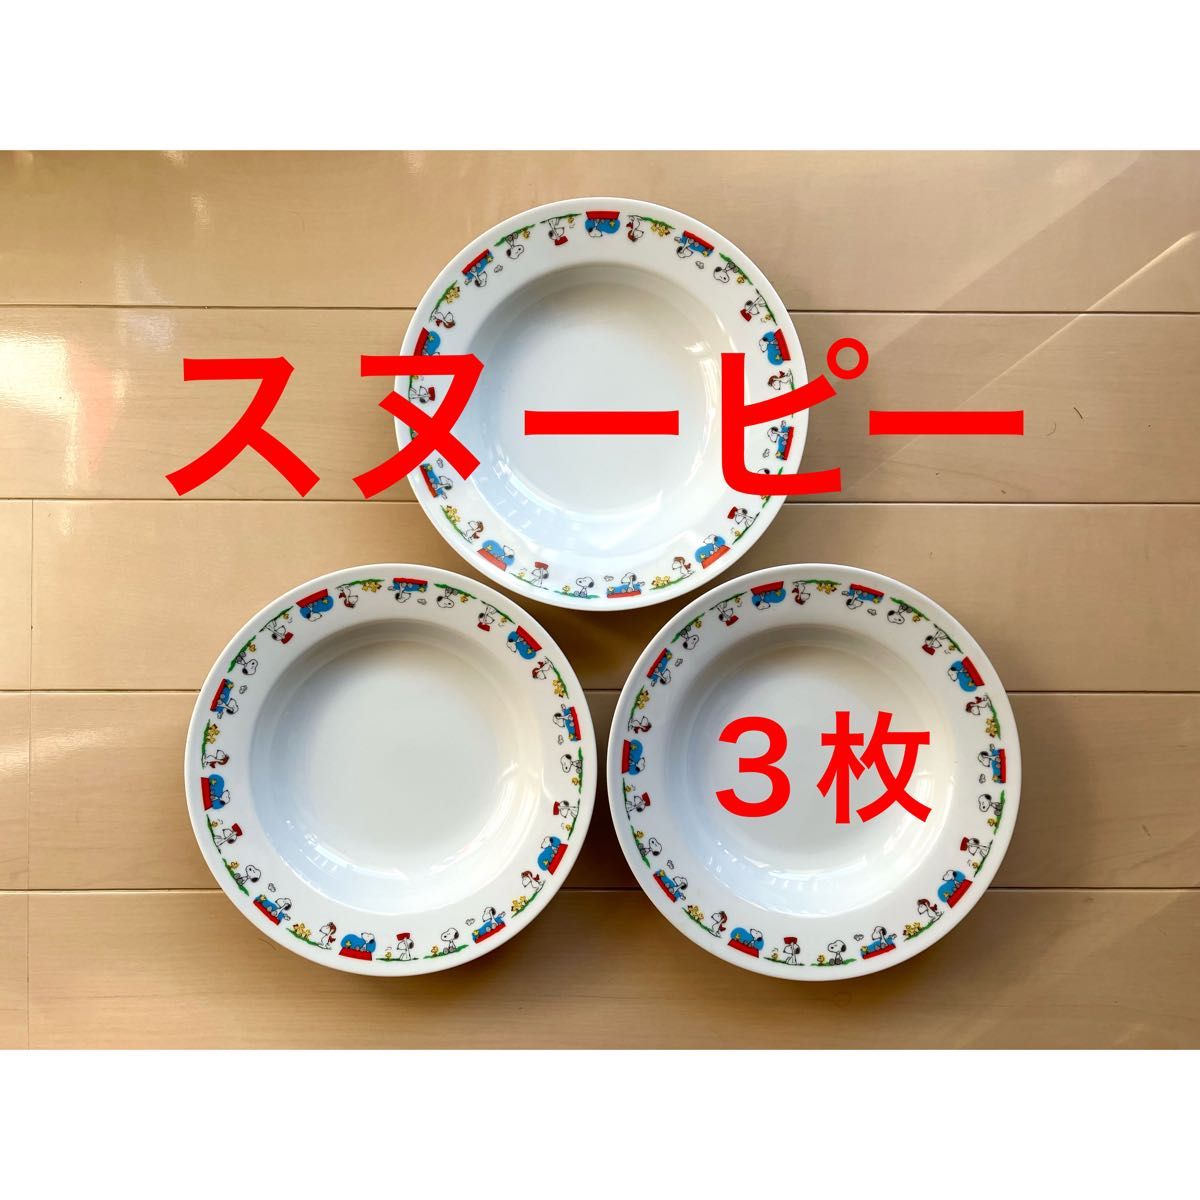 SNOOPY スヌーピー 皿 非売品 3枚まとめ売り - 食器